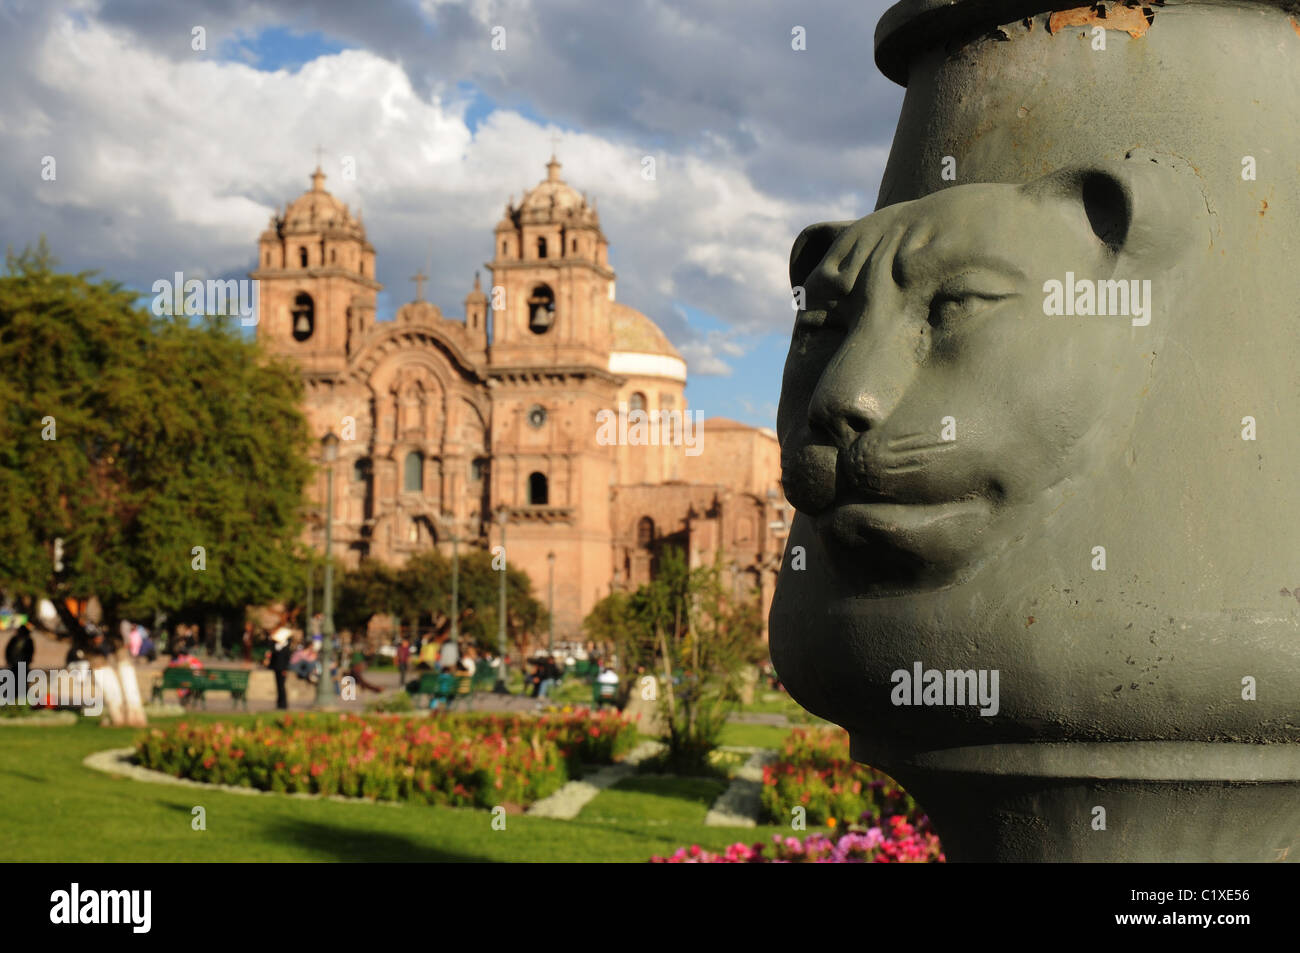 Plaza de armas cusco peru hi-res stock photography and images - Alamy